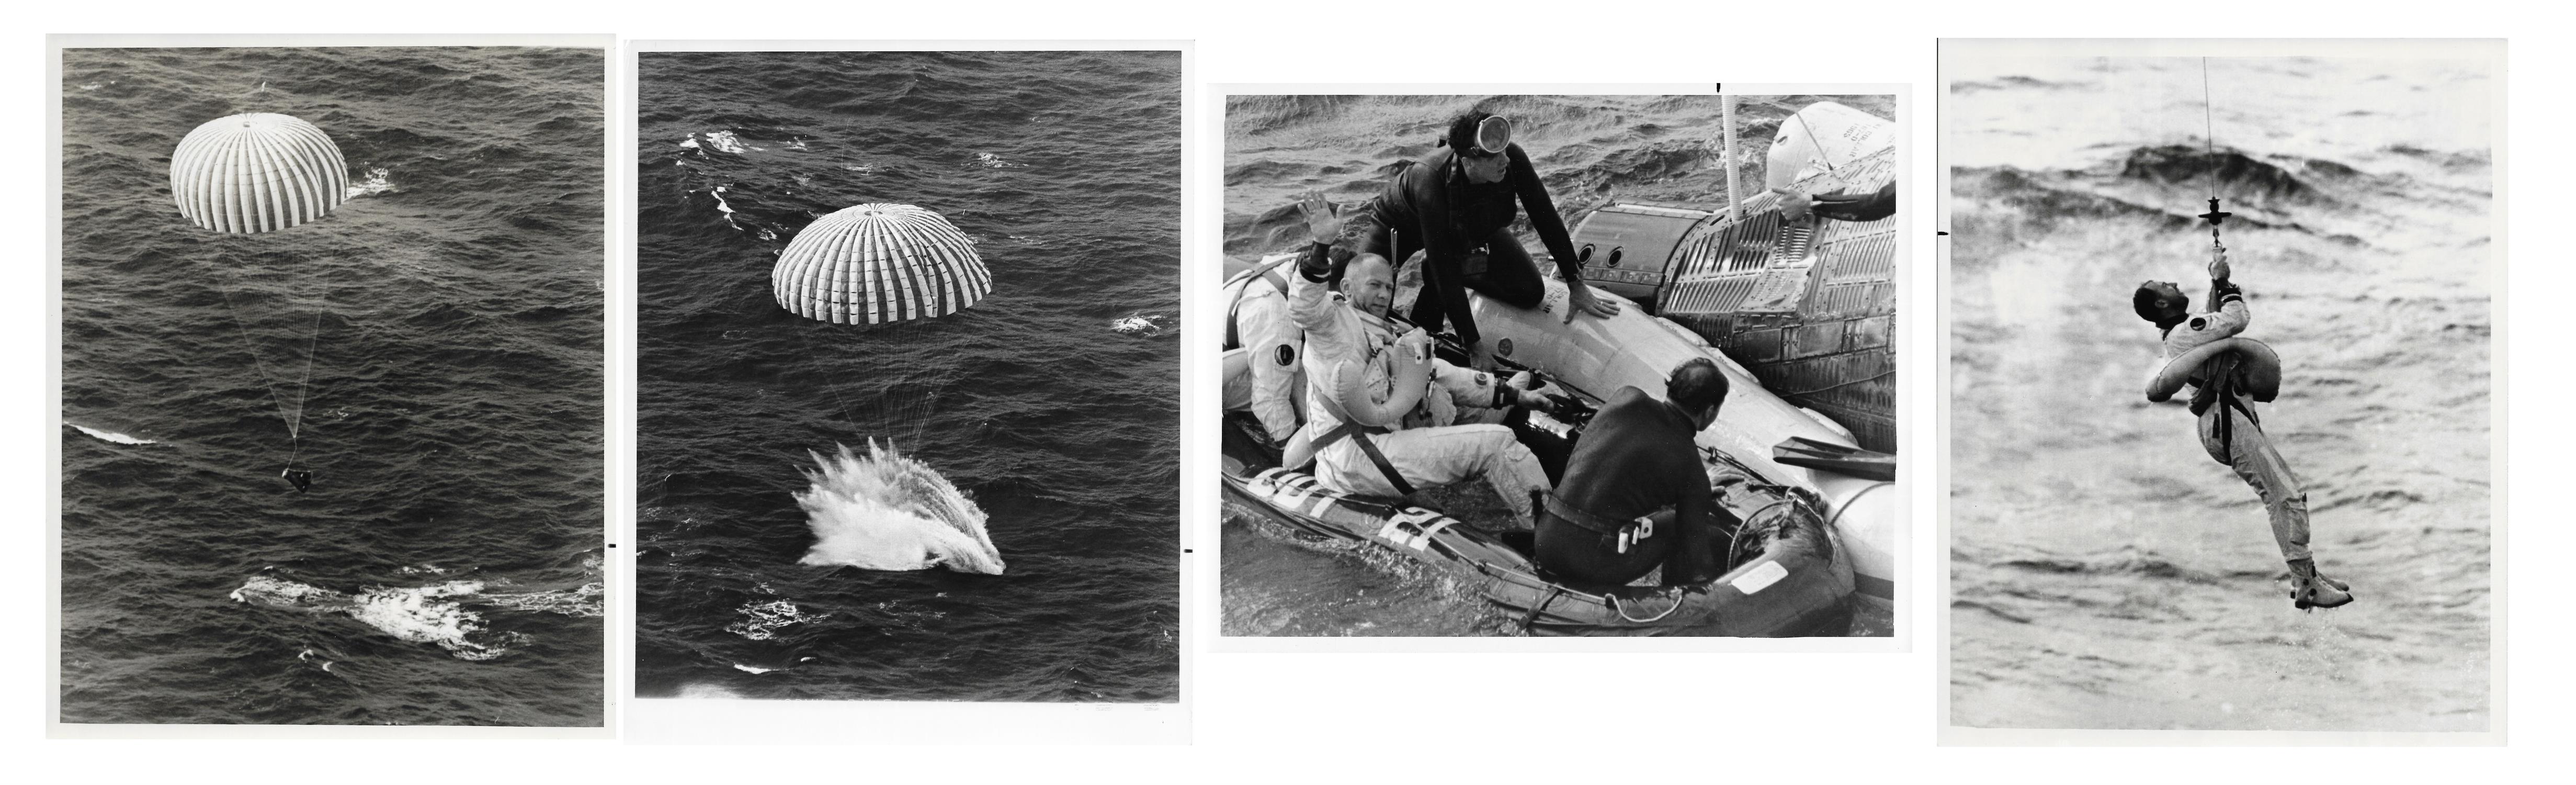 Views of splashdown and recovery [five photographs], Gemini 12, November 1966